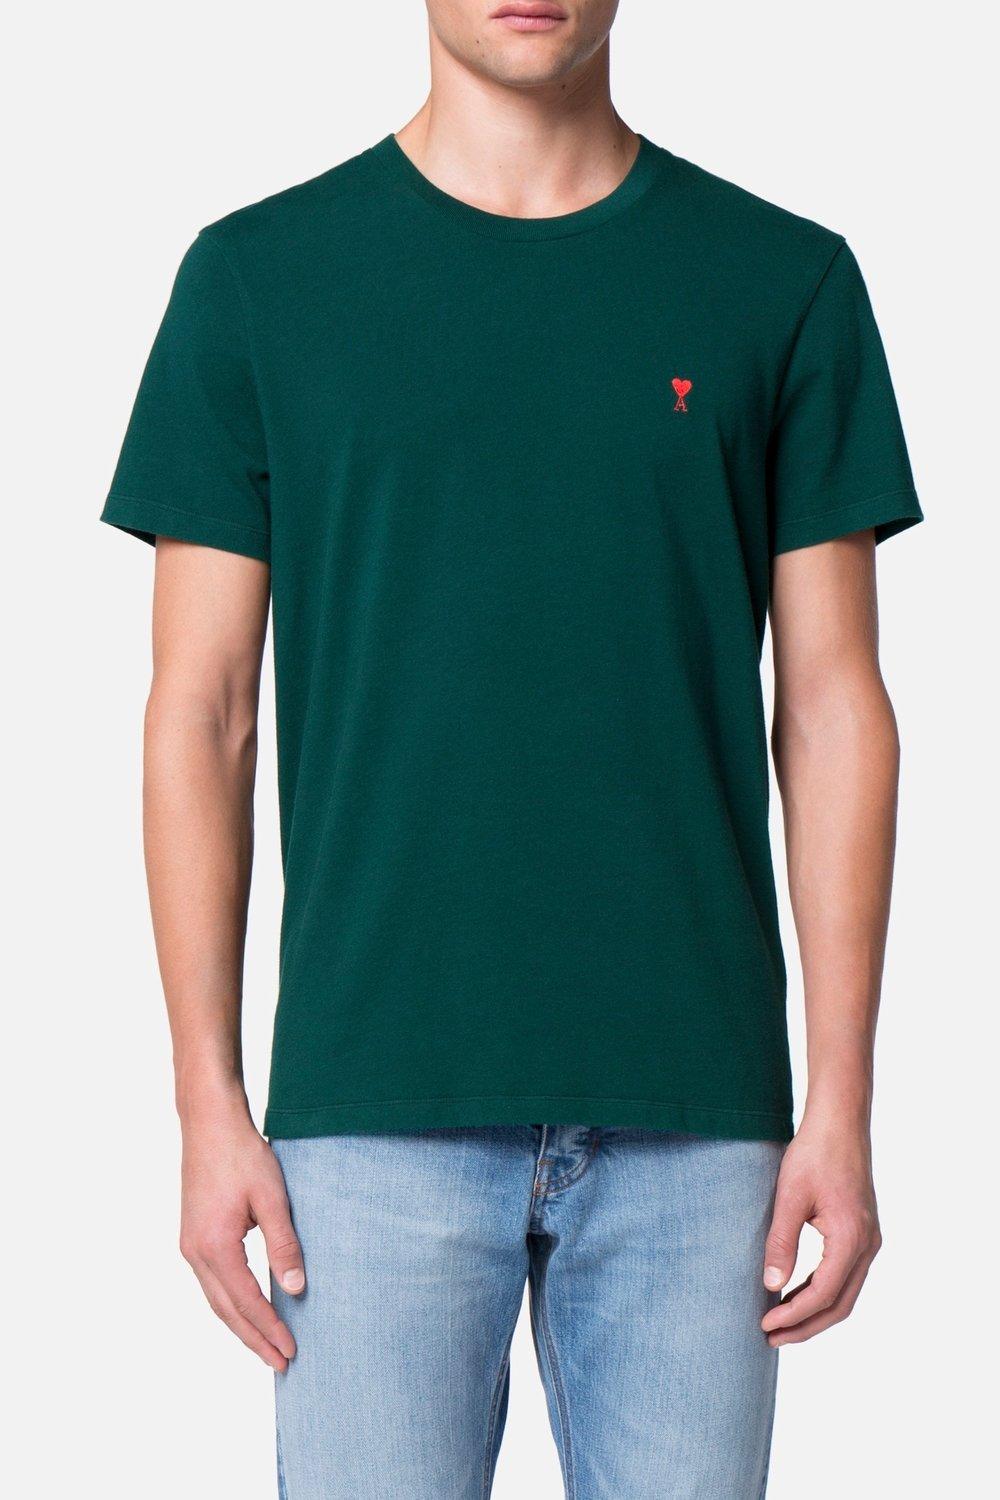 Lyst - Ami Ami De Coeur T-shirt in Green for Men